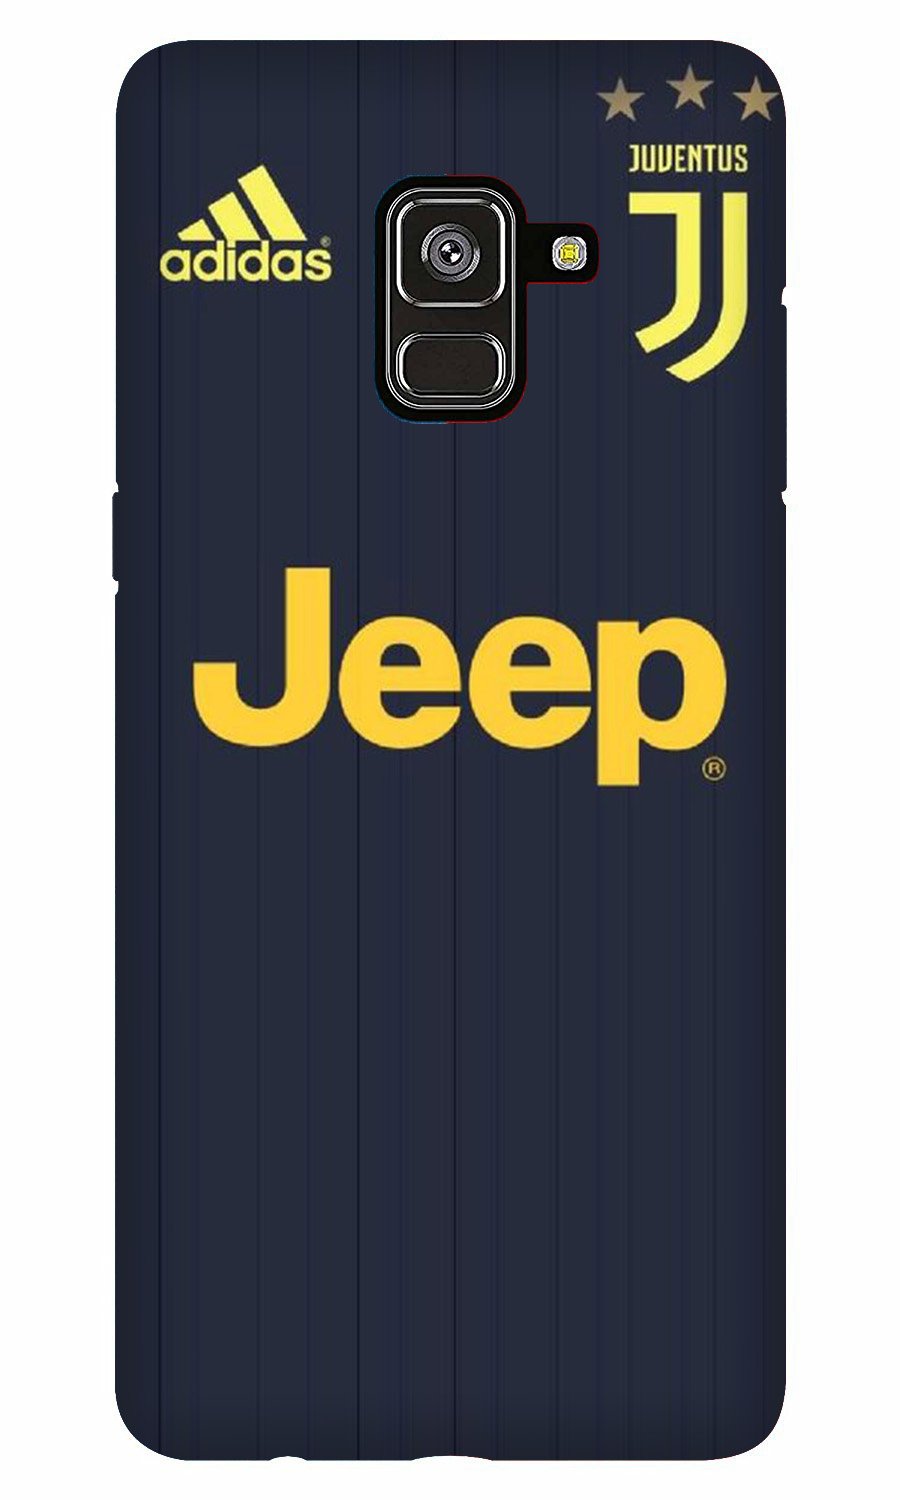 Jeep Juventus Case for Galaxy A6(Design - 161)